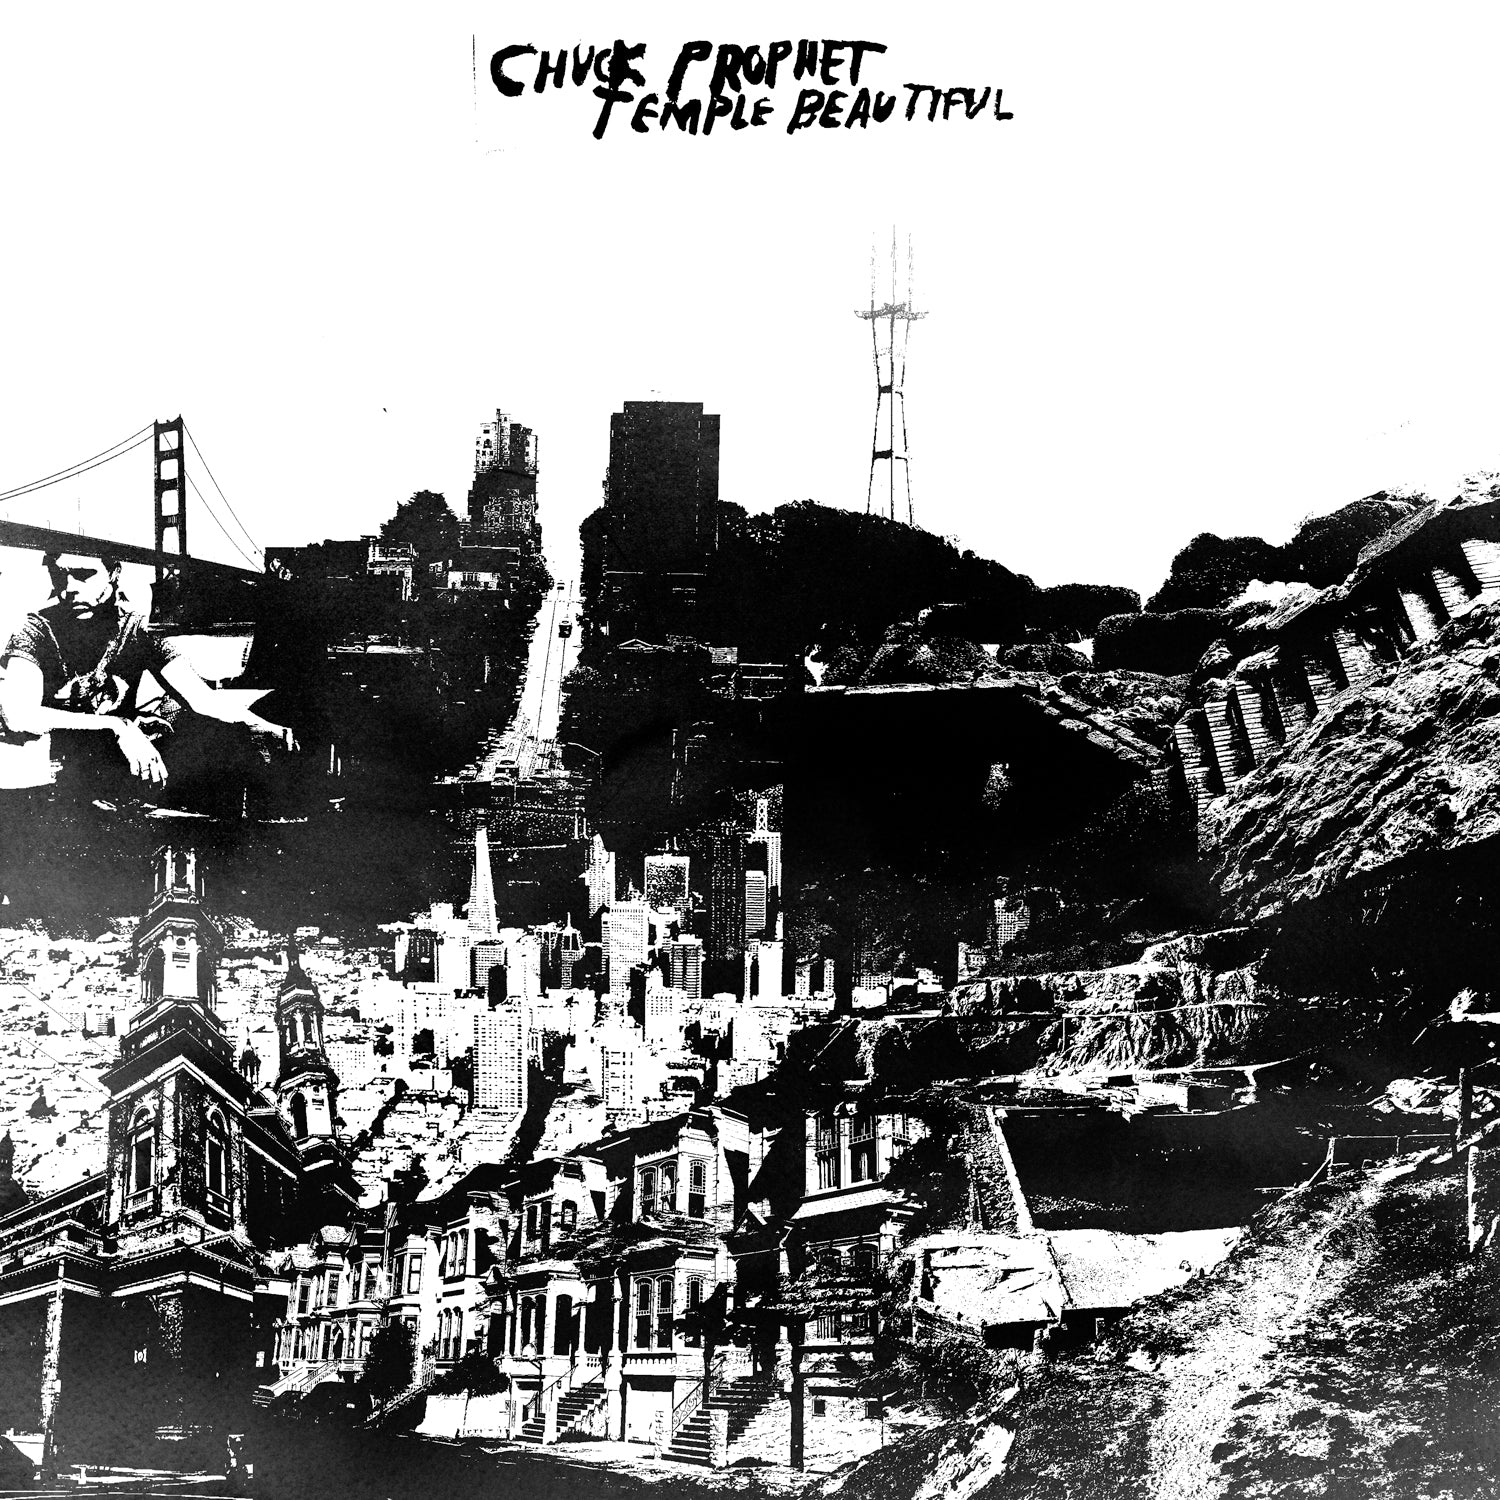 Chuck Prophet | Temple Beautiful | CD